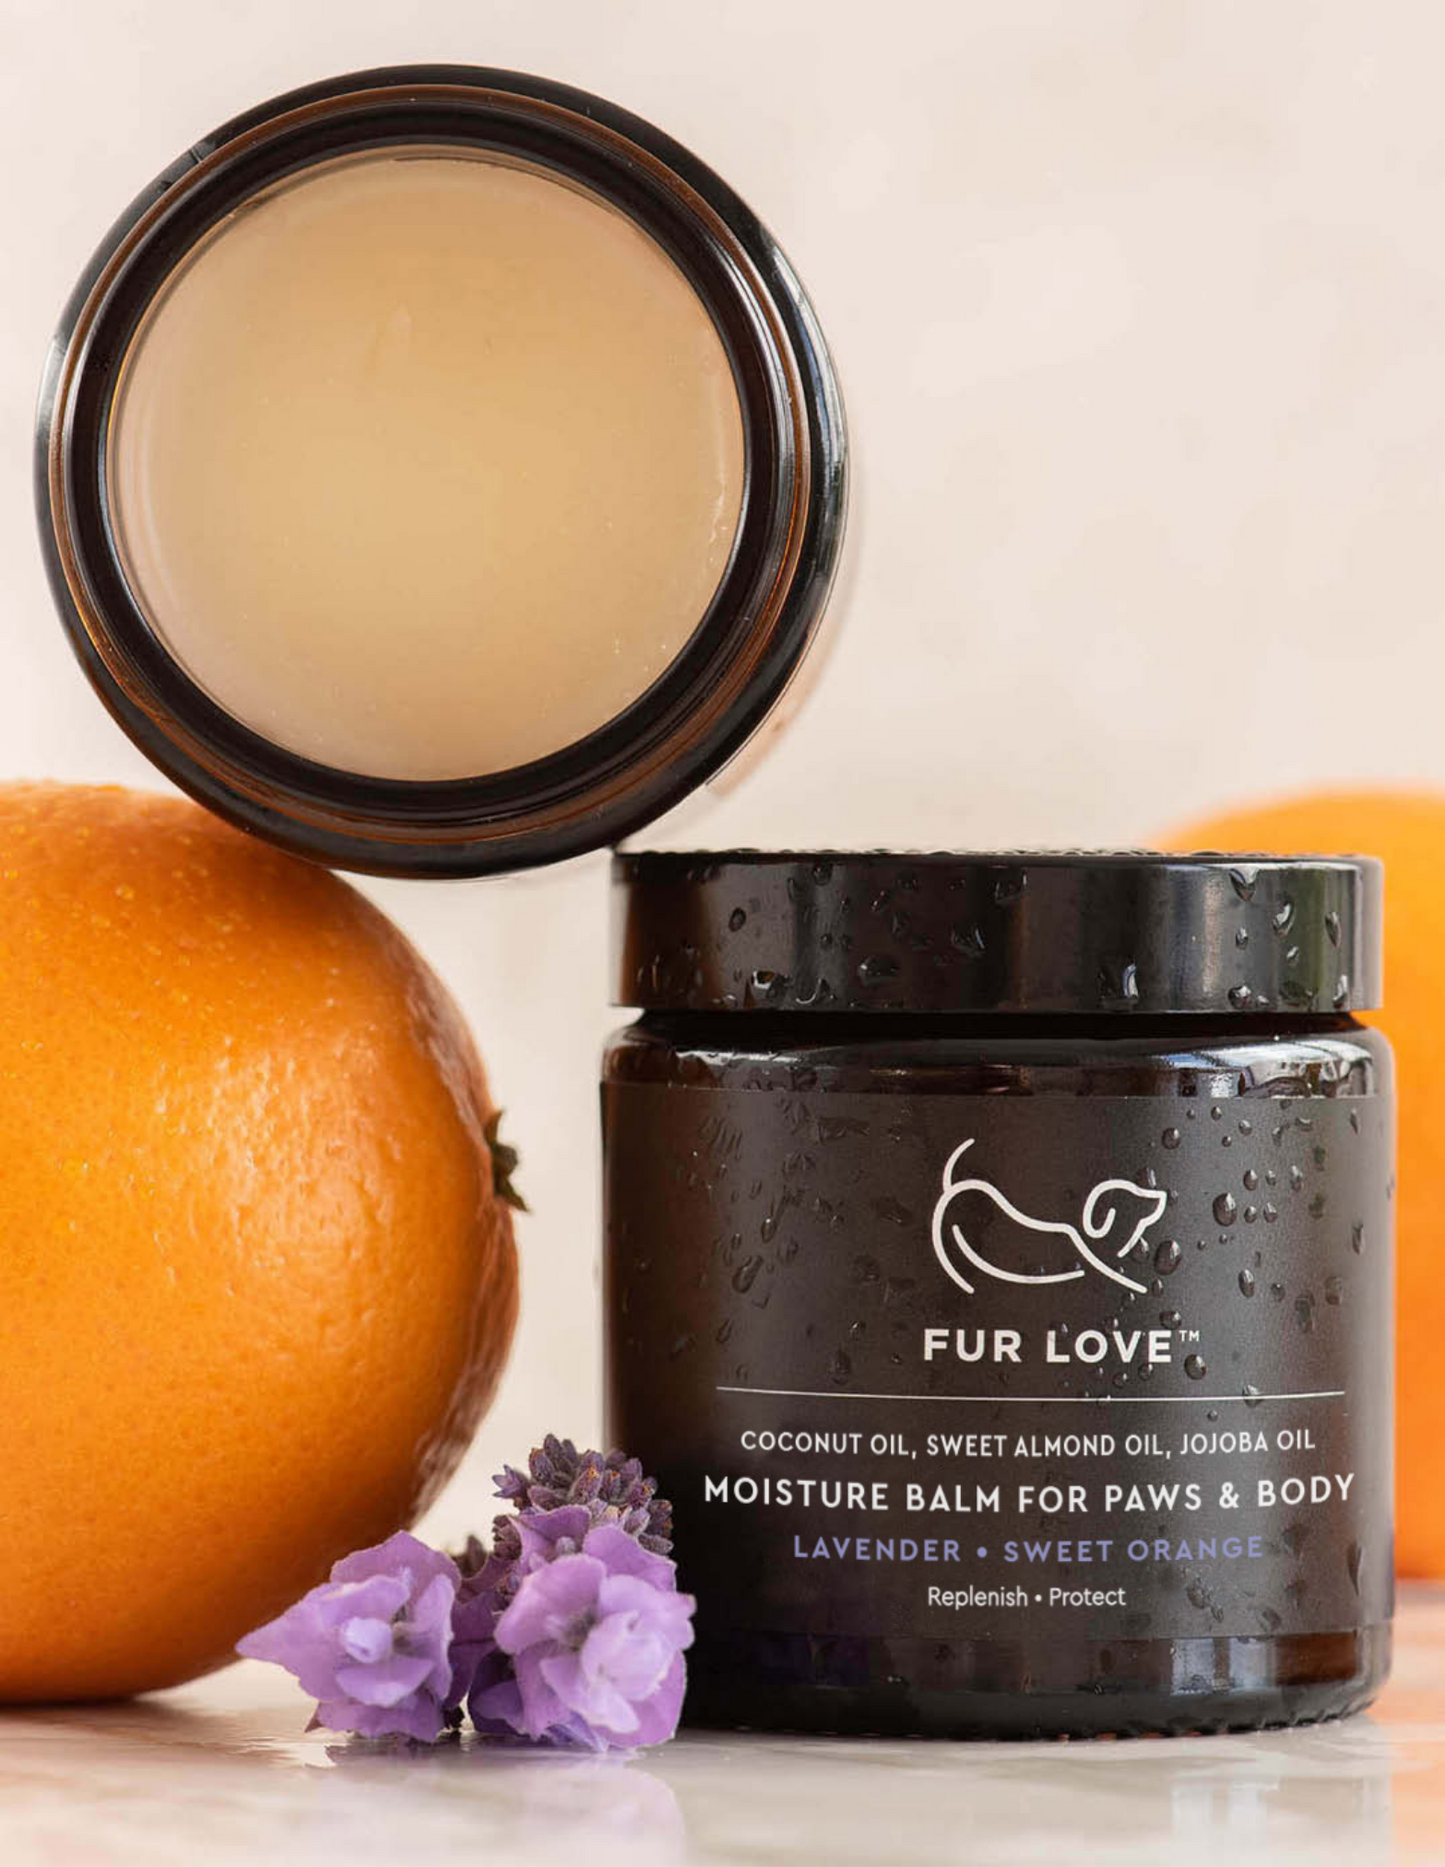 Fur Love Lavender & Sweet Orange Moisture Balm